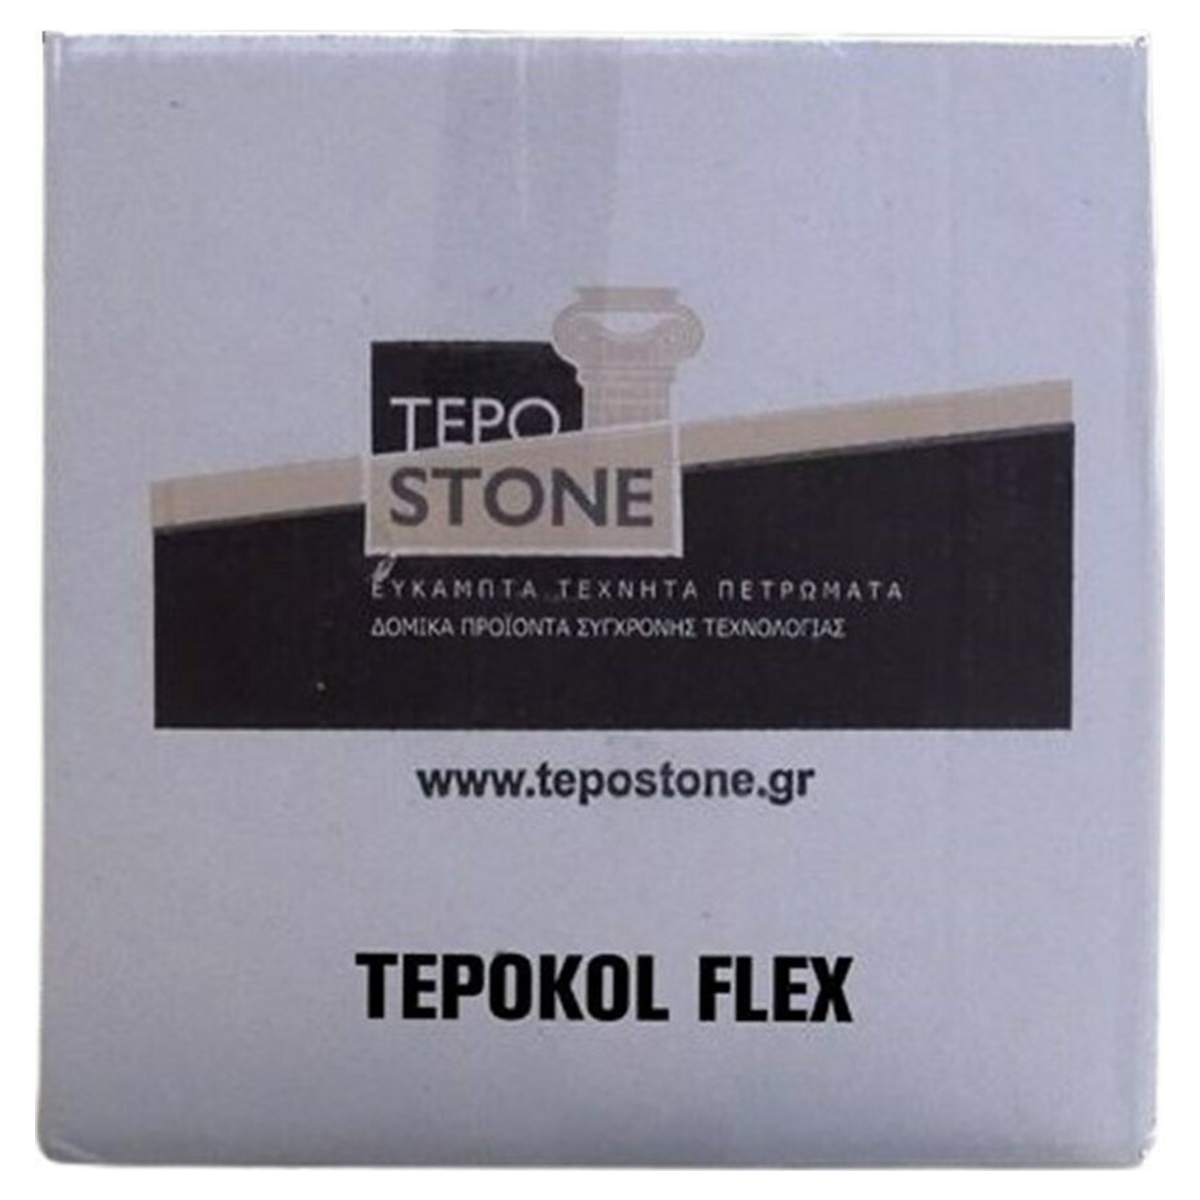 Tepostone Tepokol Flex 20kg